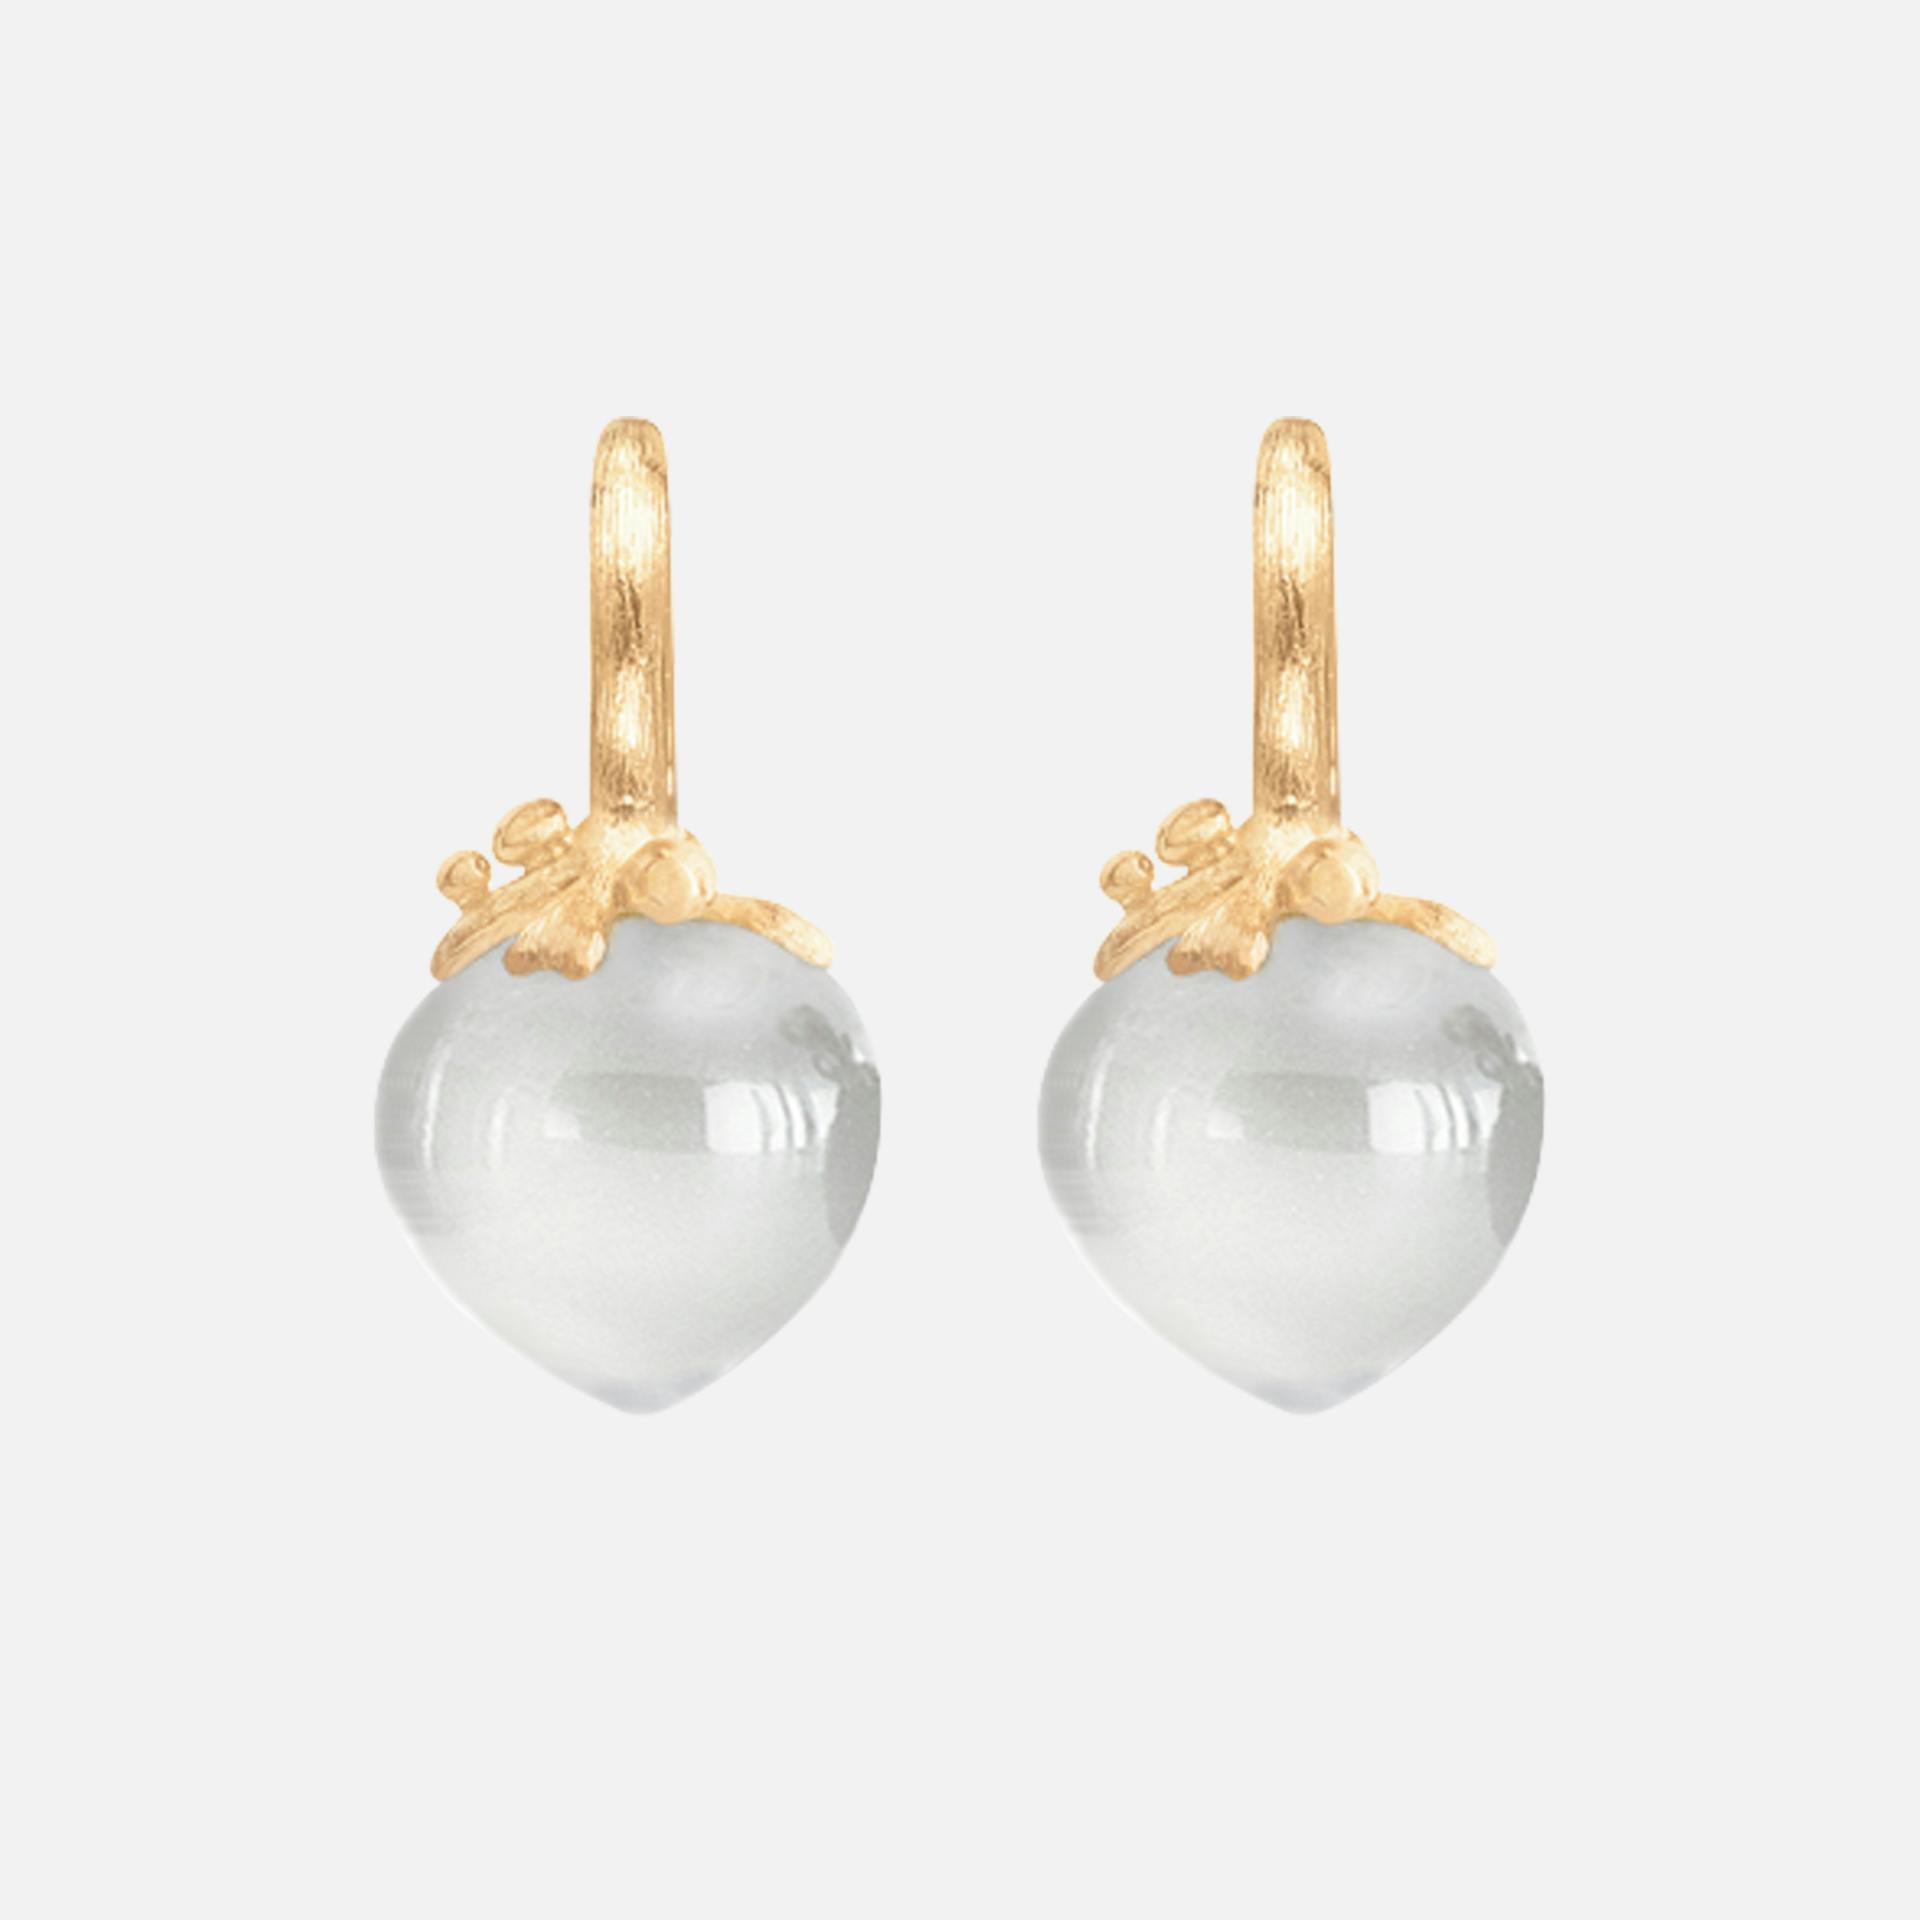 Dew drops filigree earrings 18k gold with white moonstone